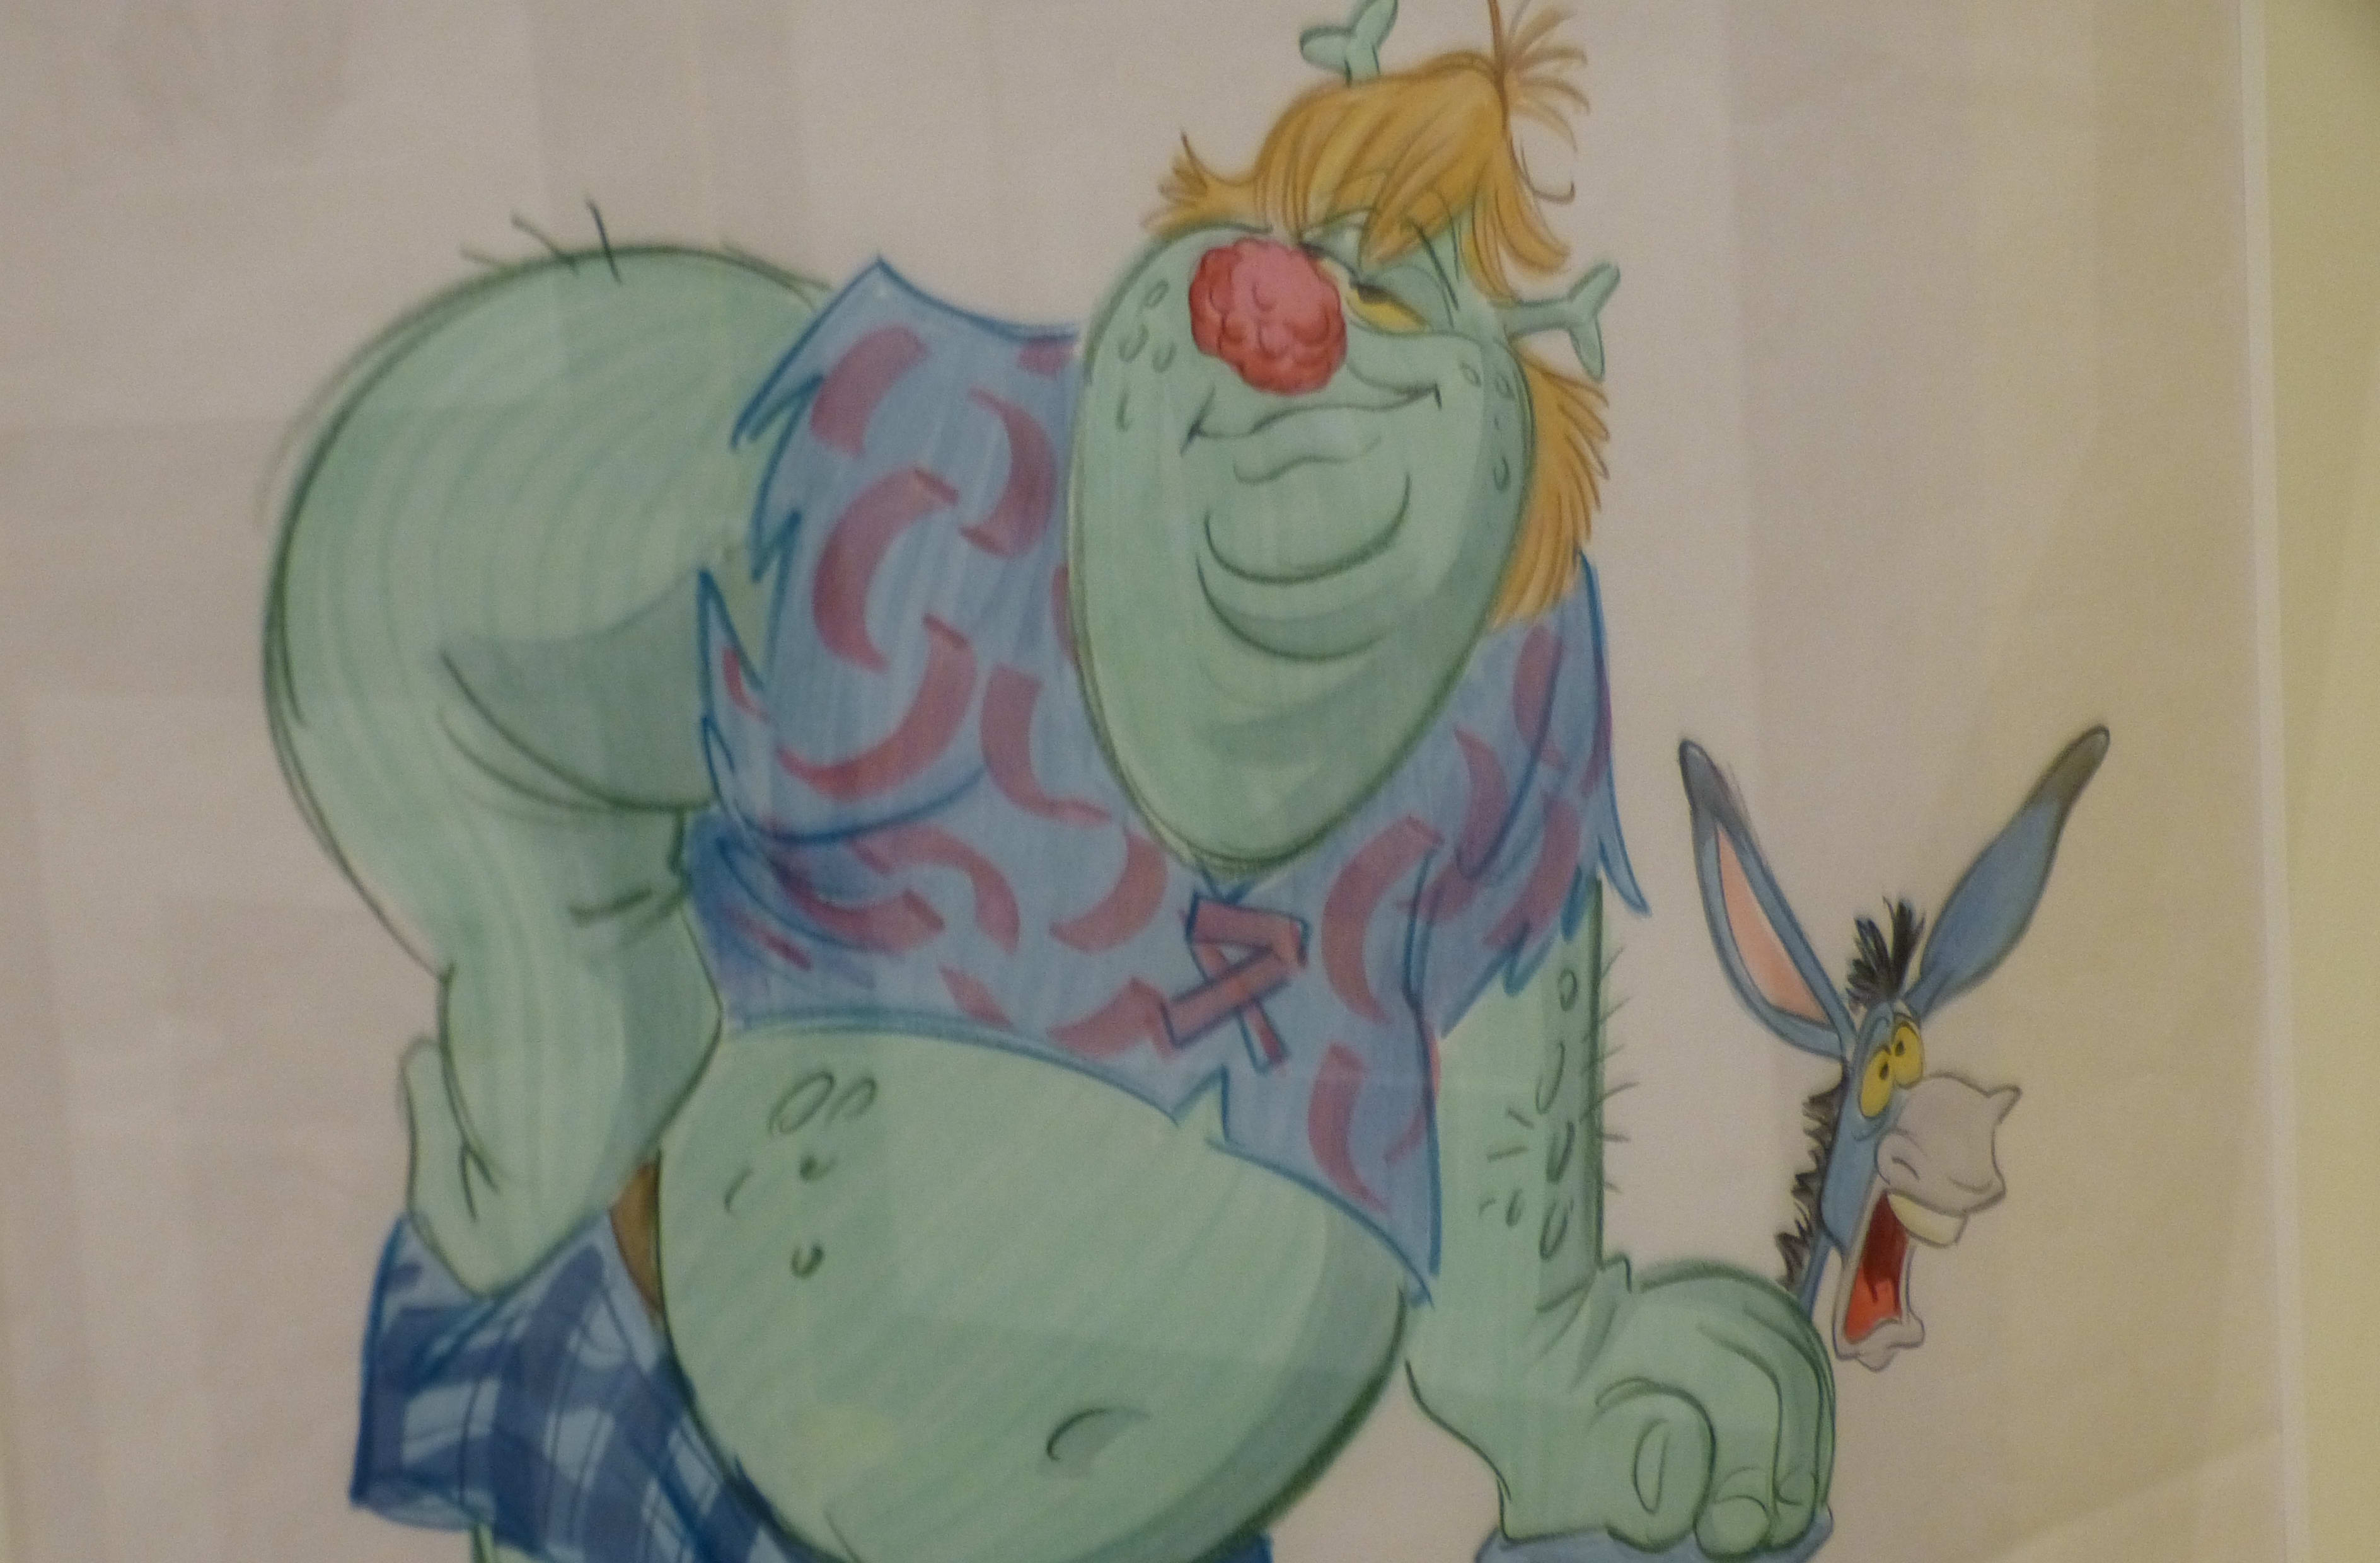 An early sketch of Shrek.